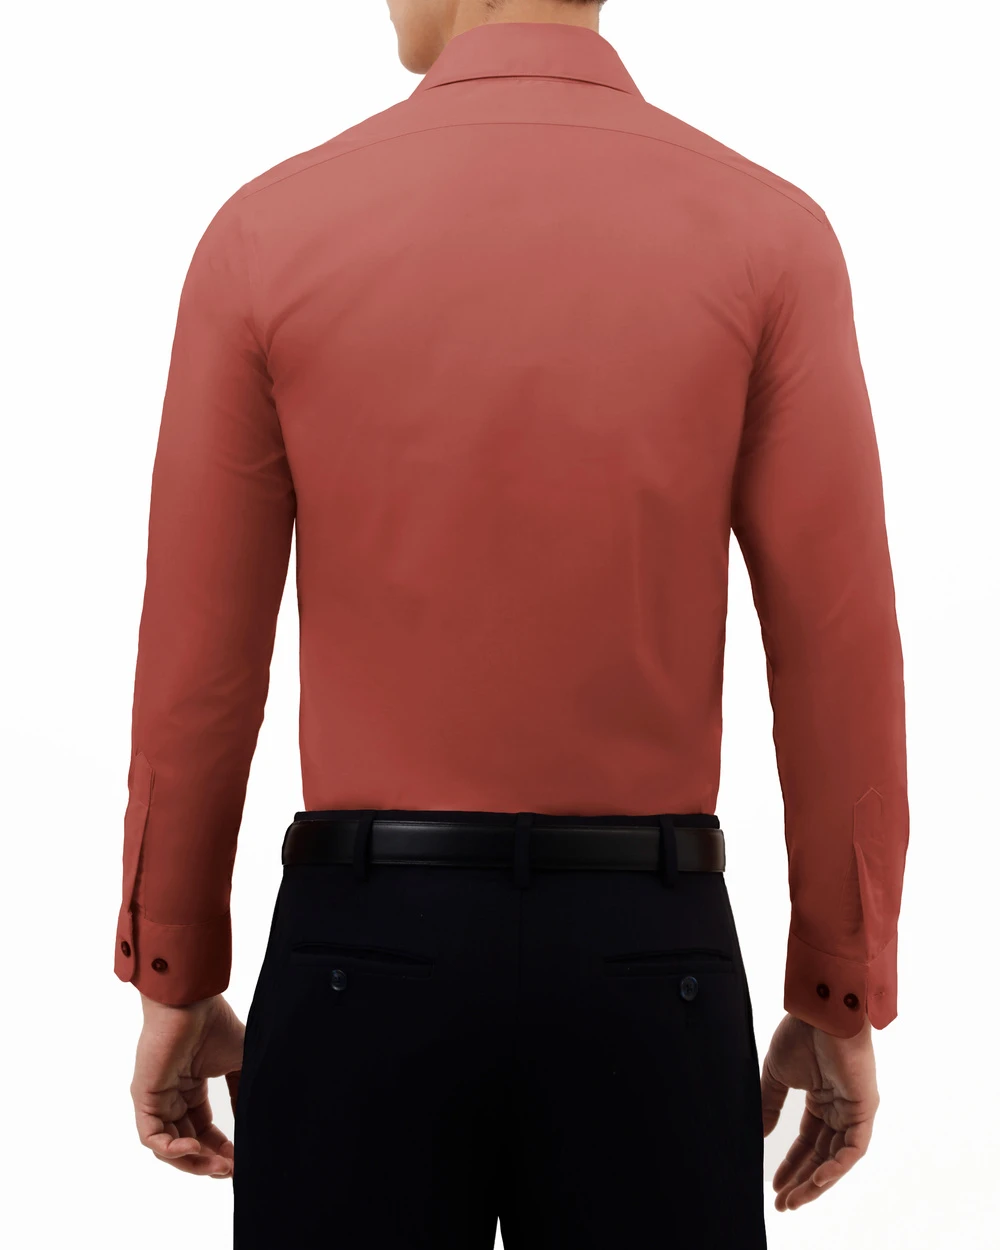 Camisa de vestir clásica roja manga larga slim fit